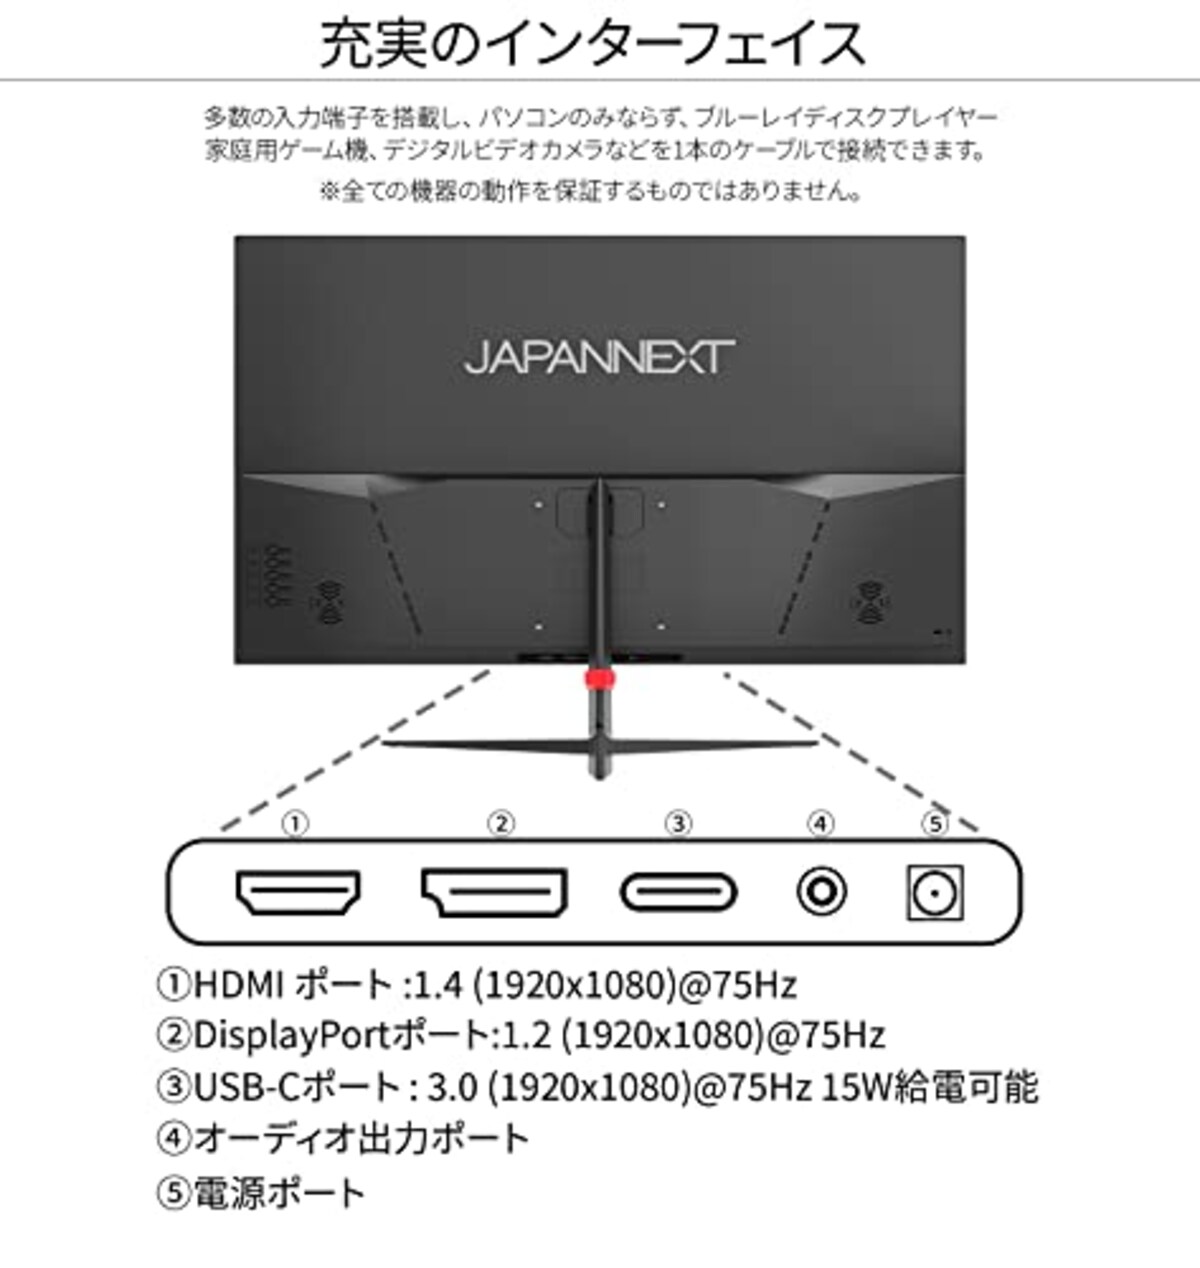  【Amazon.co.jp限定】JapanNext 27インチ USB-C給電(最大15W)対応フルHD液晶モニター JN-V27FLFHD-C HDMI DP USB-C(15W)画像3 